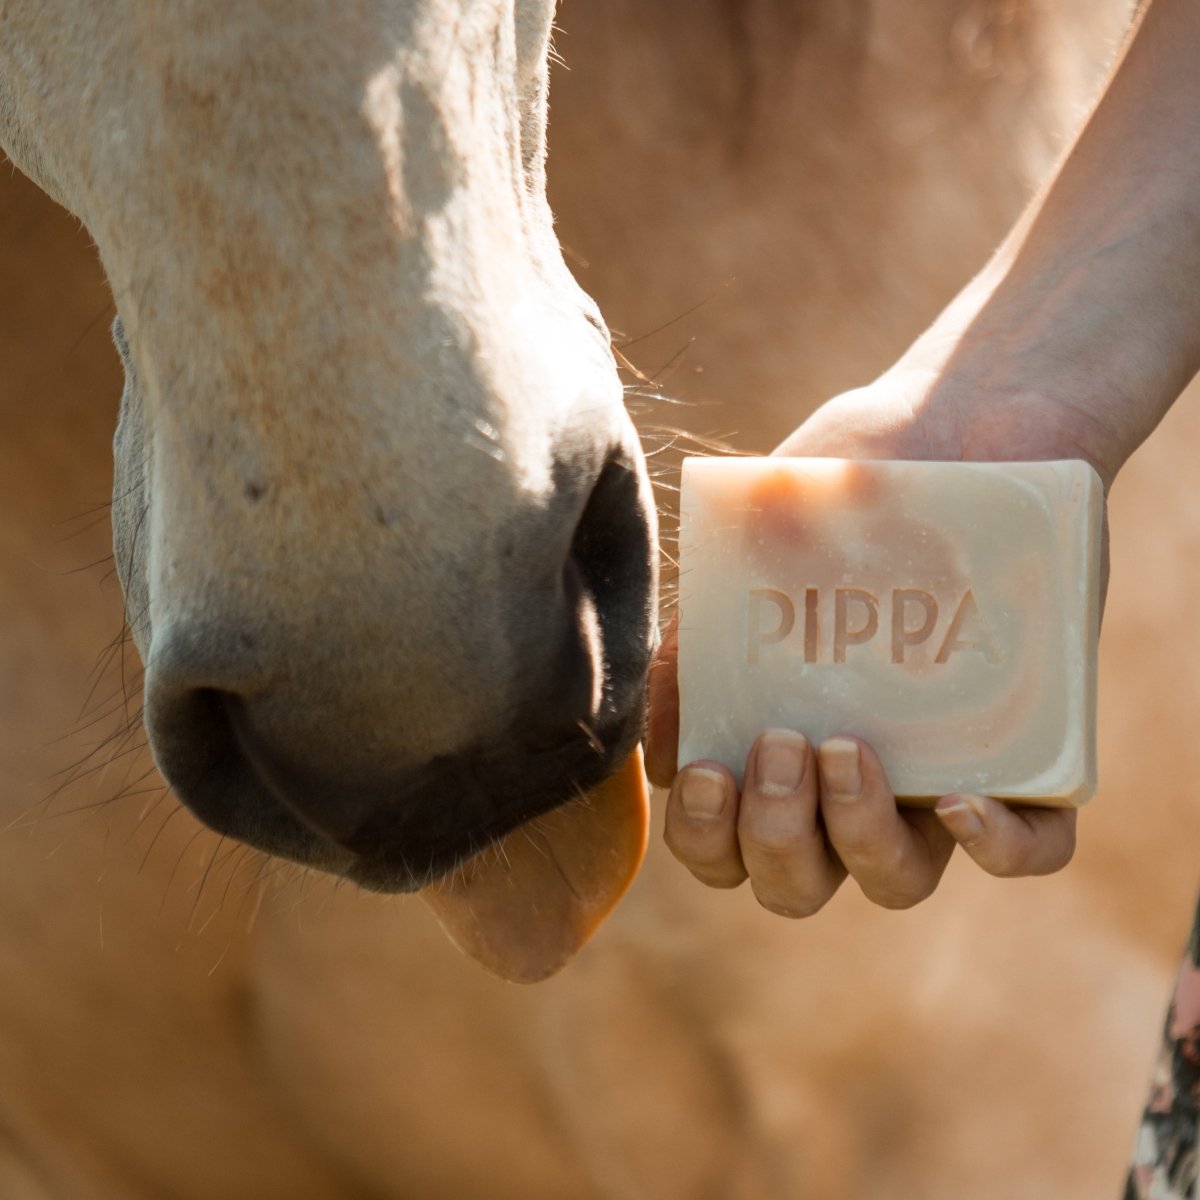 PIPPA Paardenshampoo Rosemary & Rice - PIPPA Equestrian Soap - Shampoo en crèmespoeling voor huisdieren